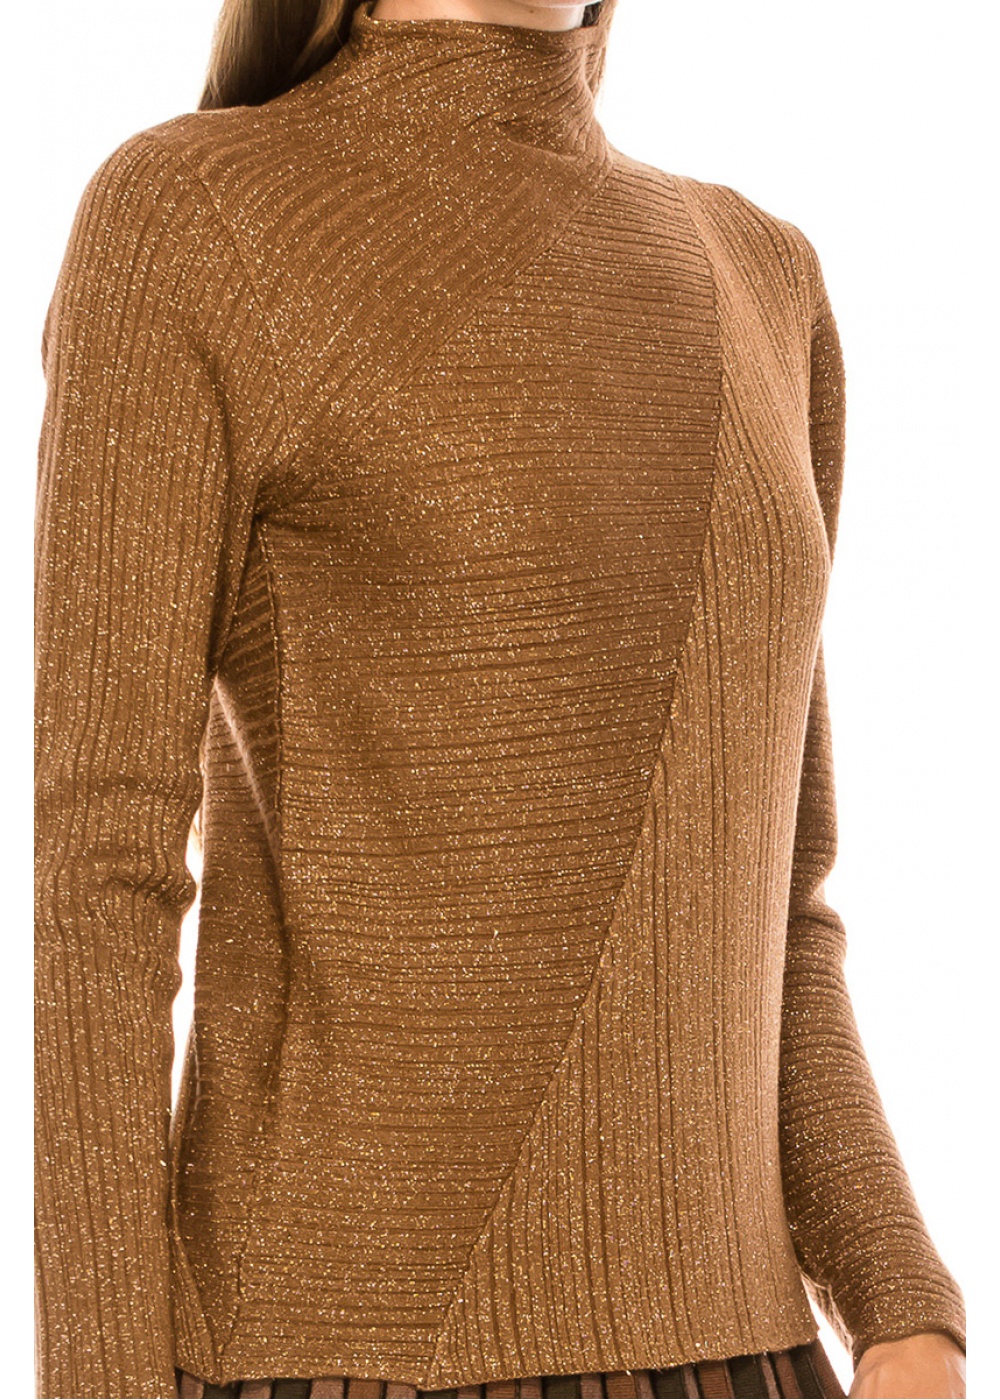 Shiny lurex sweater in rust